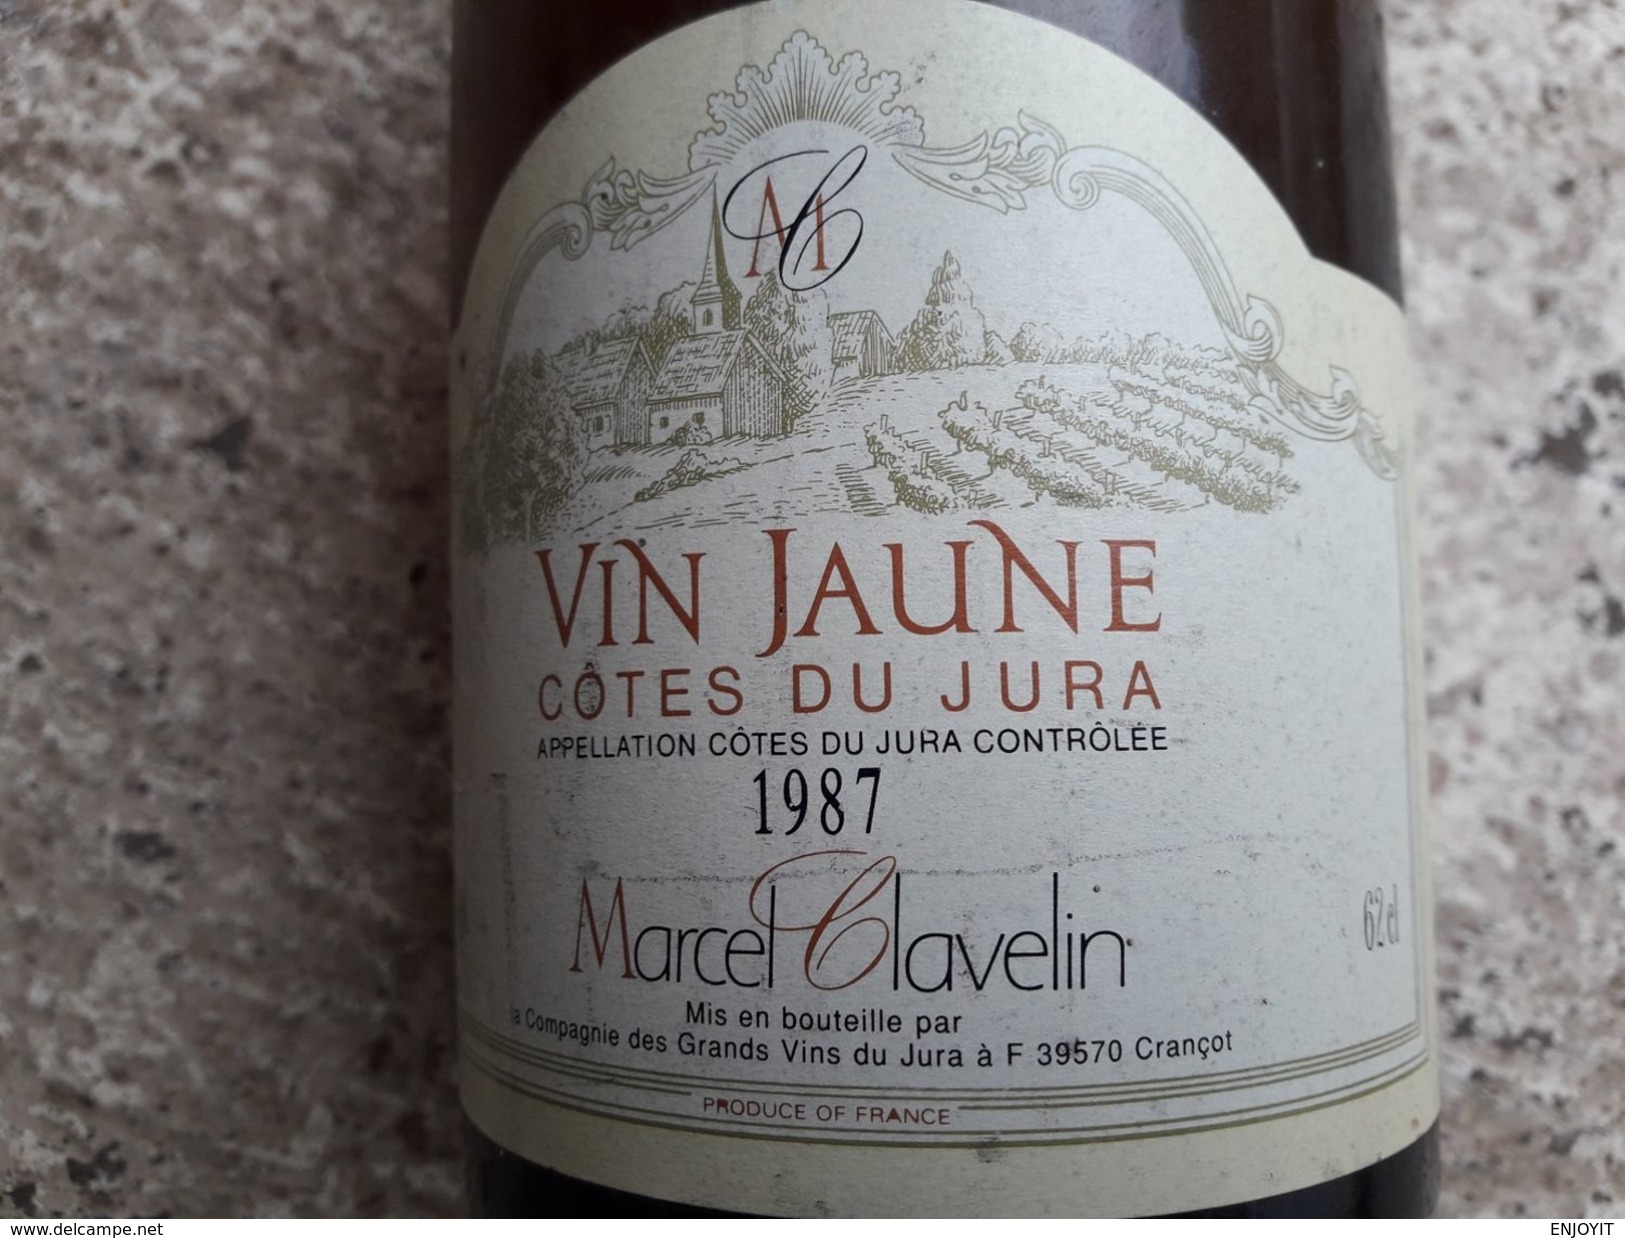 VIN JAUNE COTES DU JURA 1987 - Wine